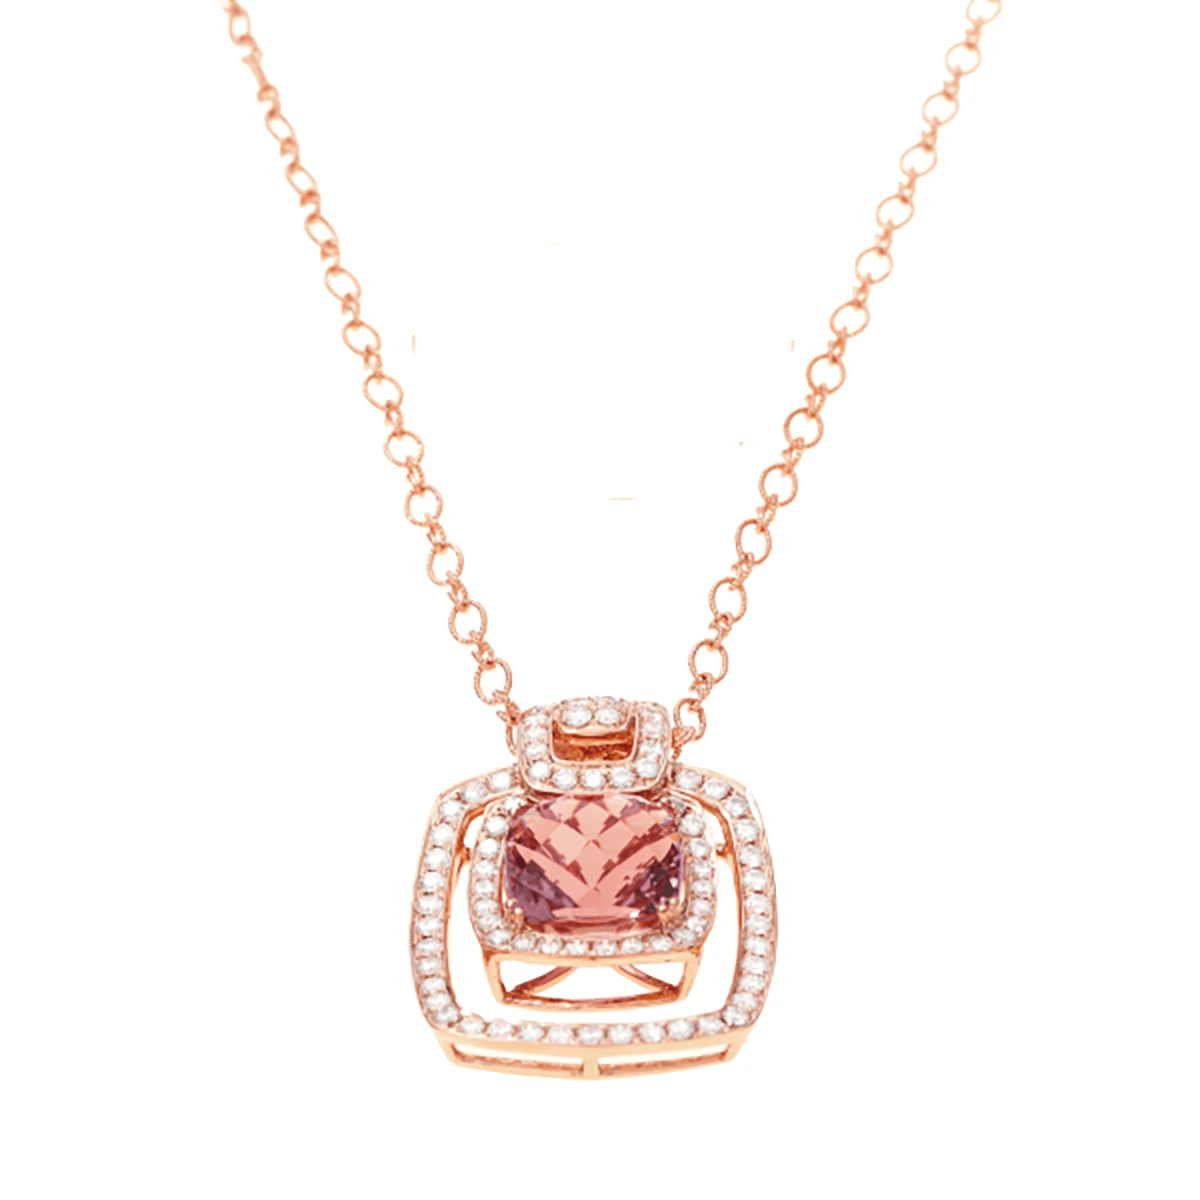 Heiress - 18 Karat Amber Hue Gold and Pink Tourmaline Necklace - Red Gold®